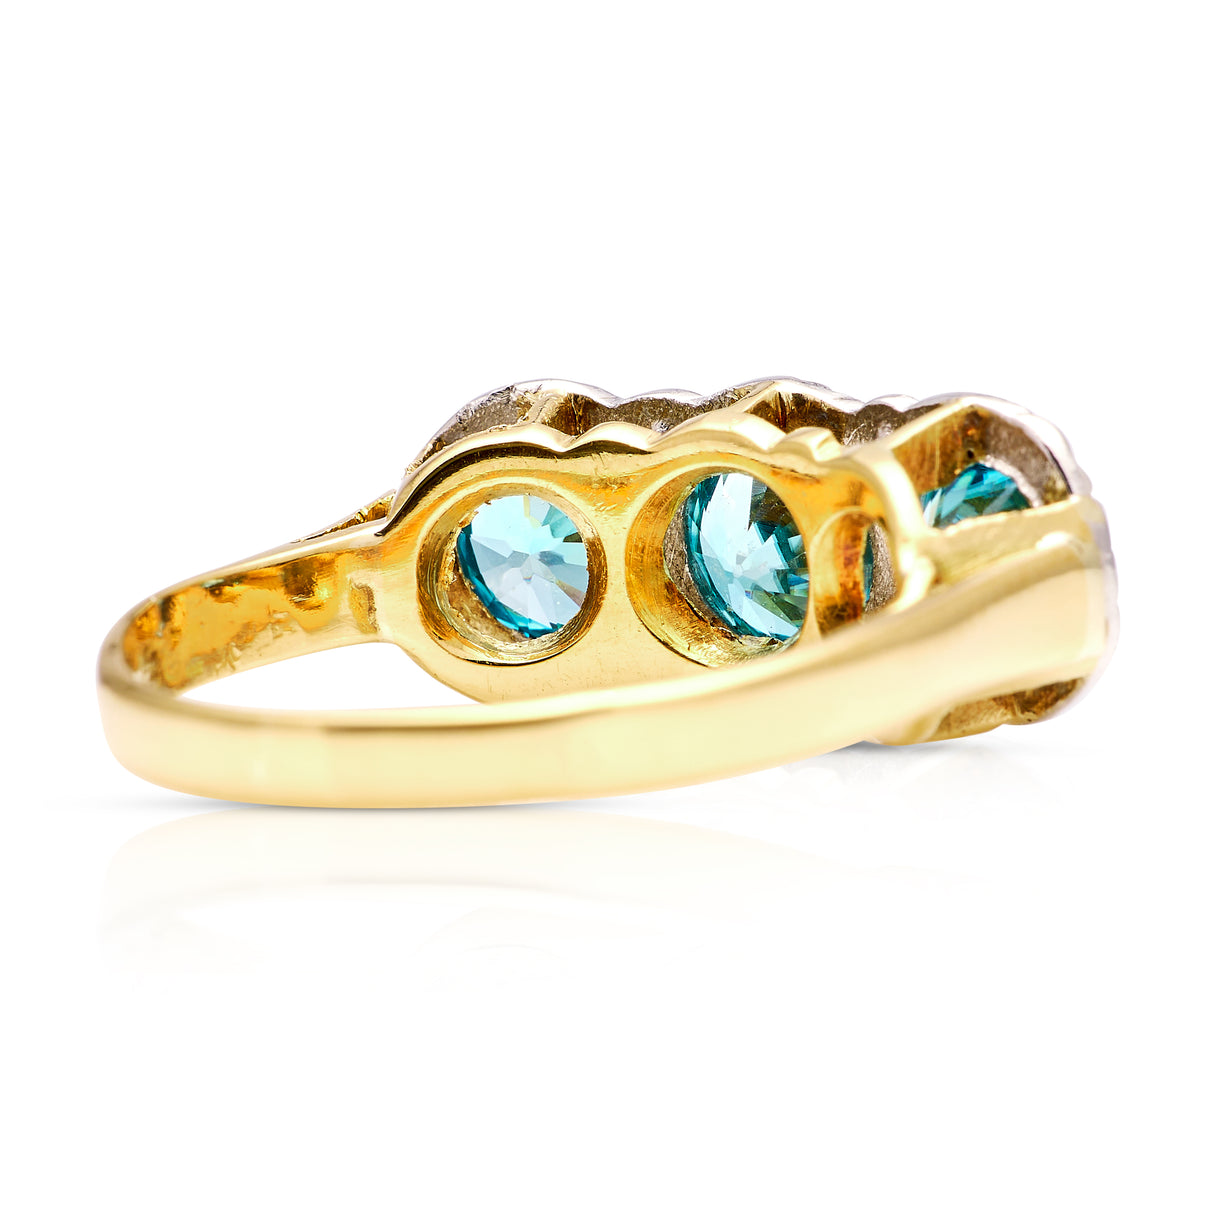 1930s zircon and diamond three stone cluster ring, 18ct yellow gold & platinum